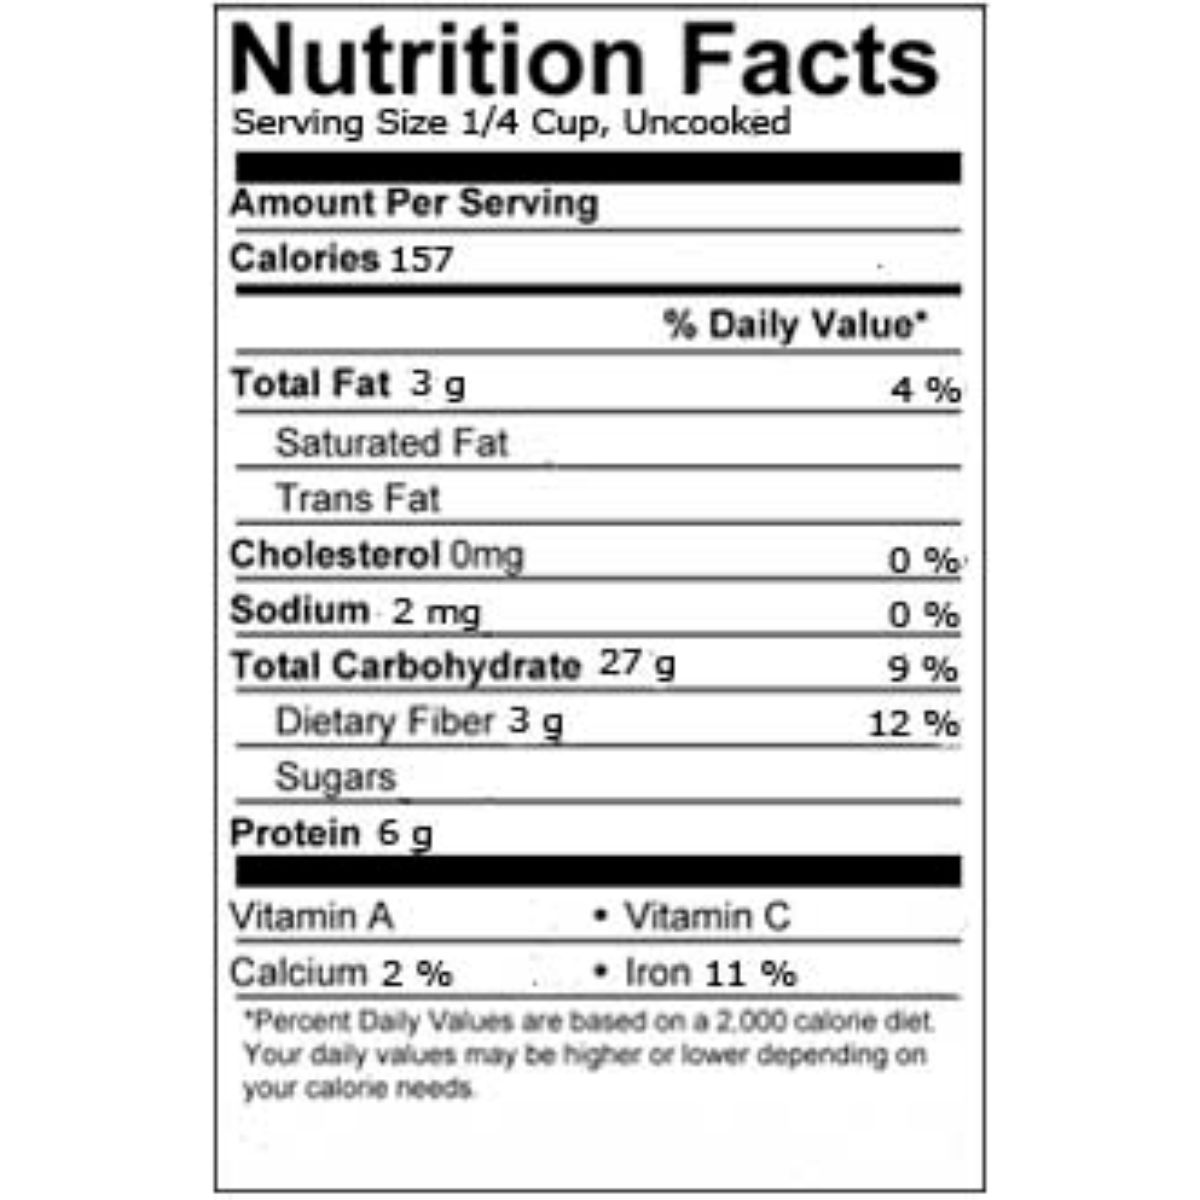 Buy Healthy Munch Quinoa Seeds 250 gms at Best Price Online